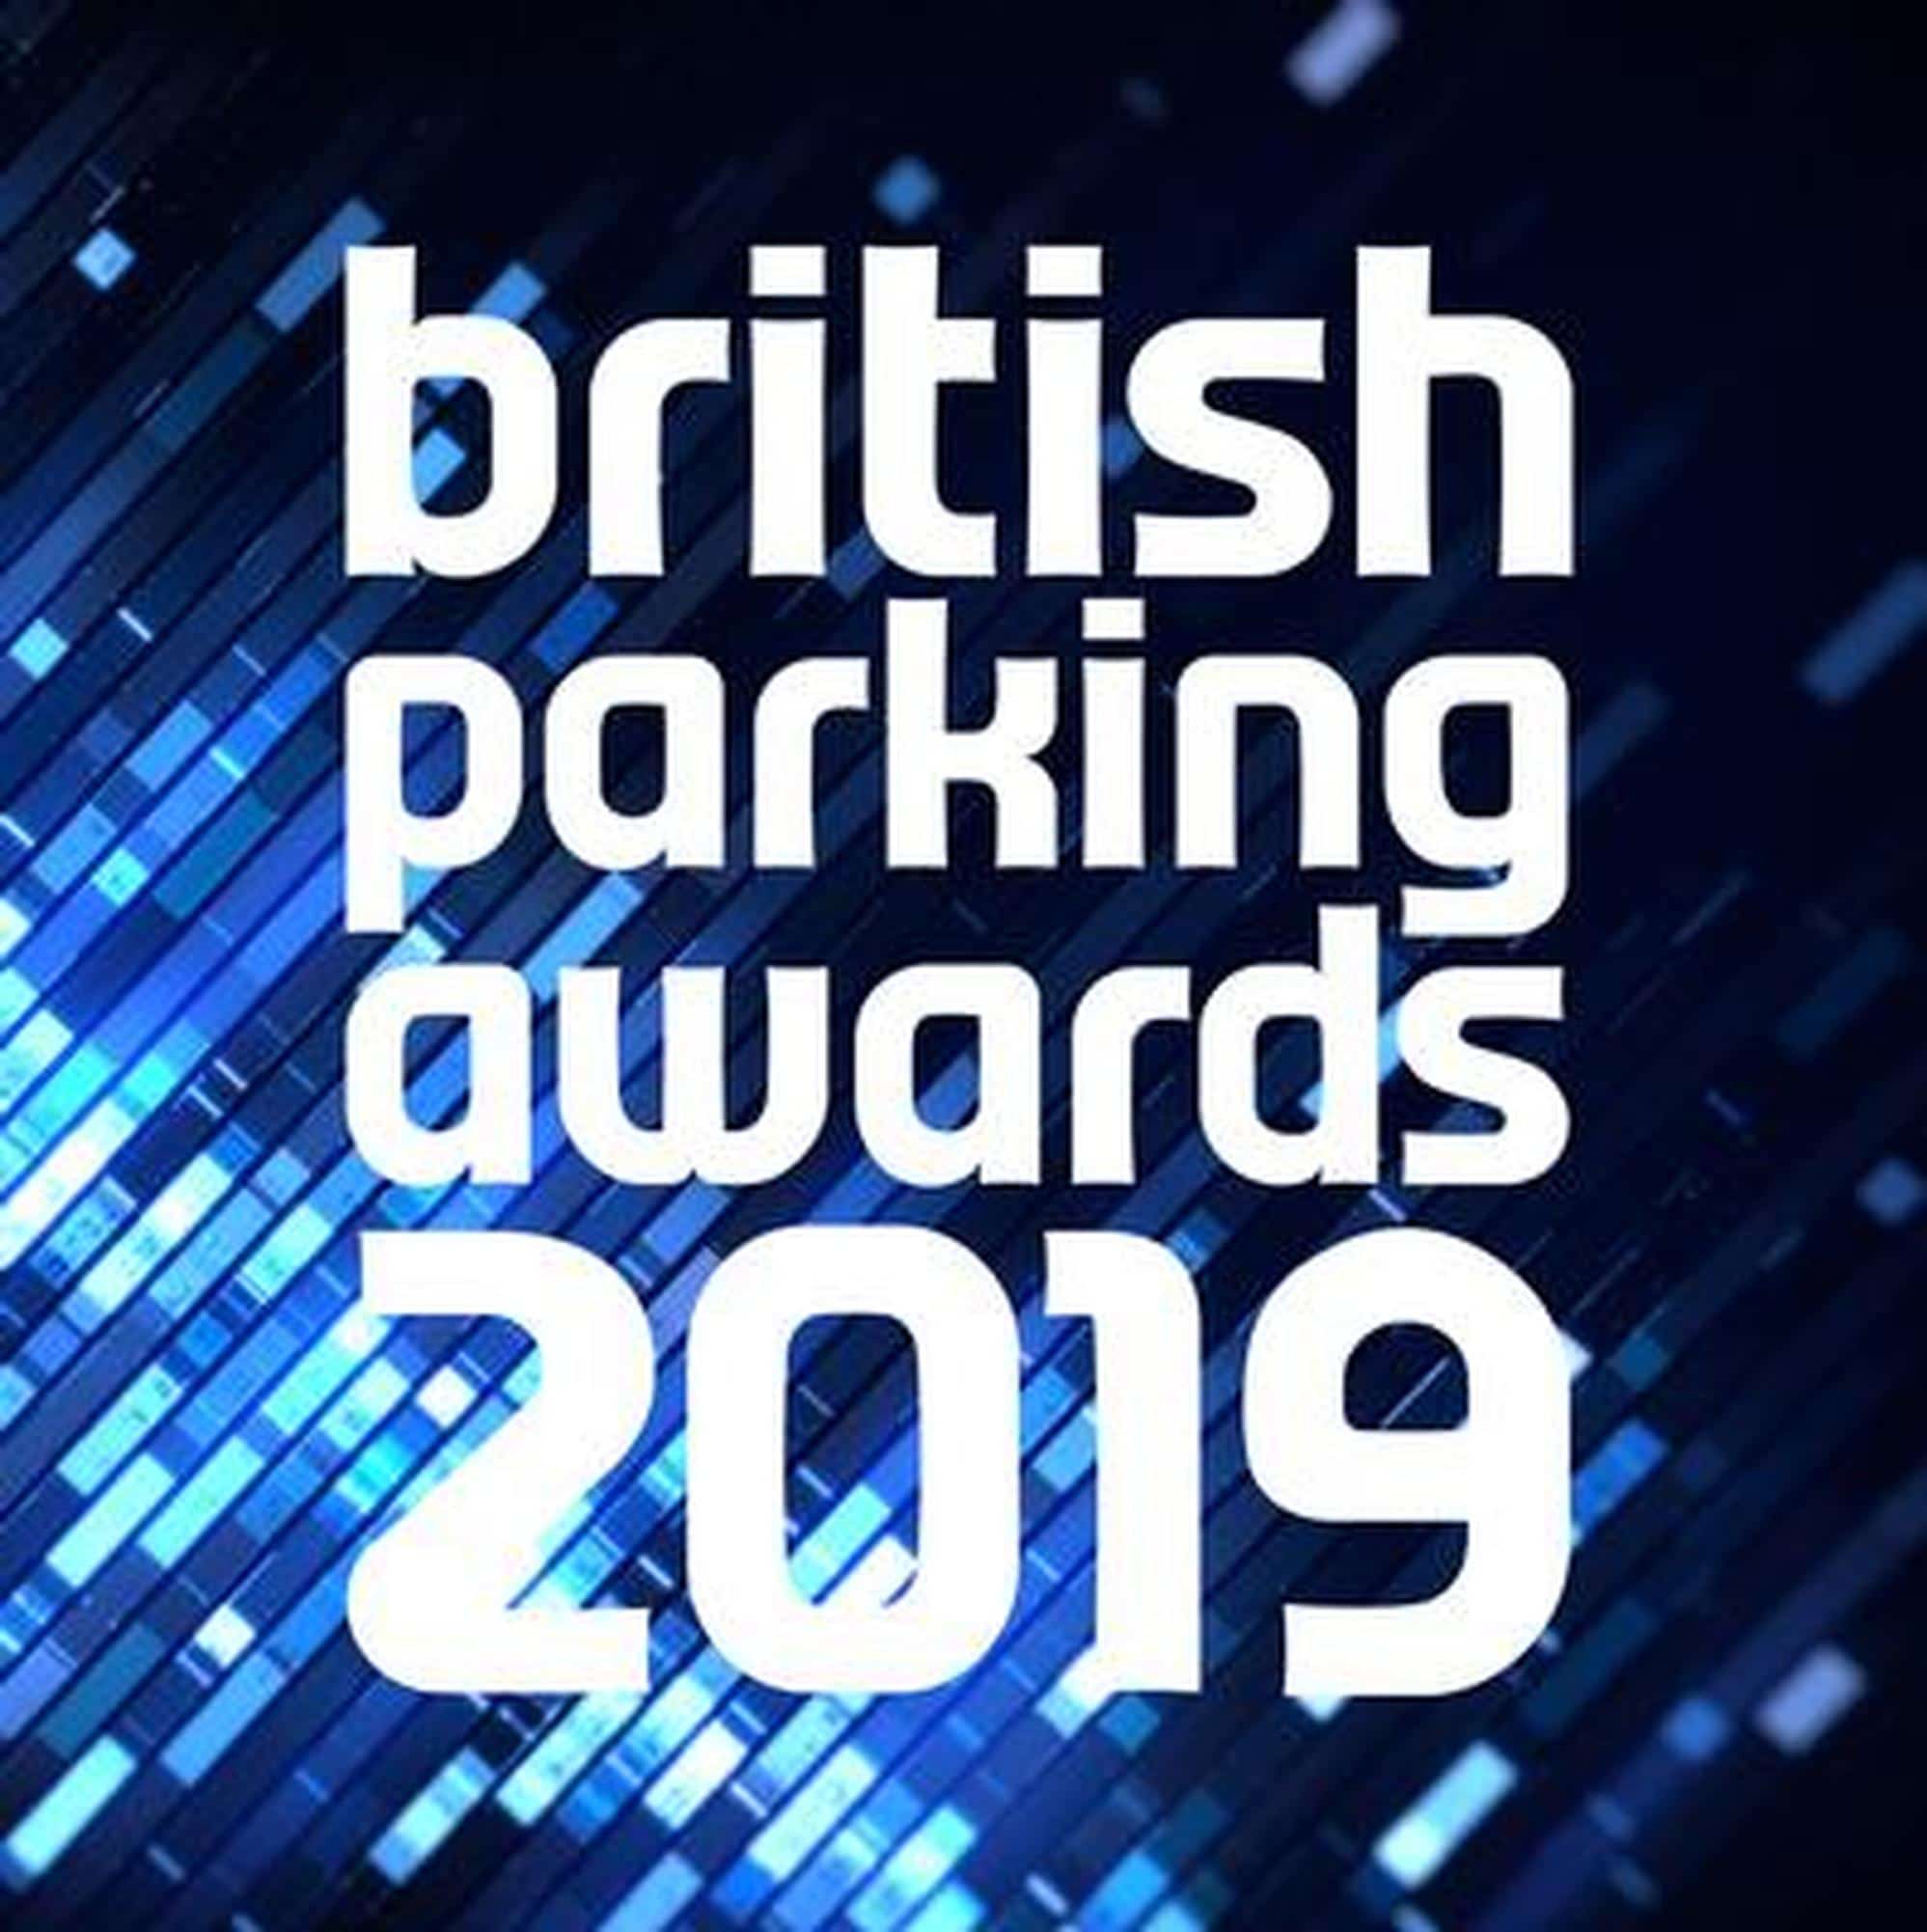 British Parking Awards 2019